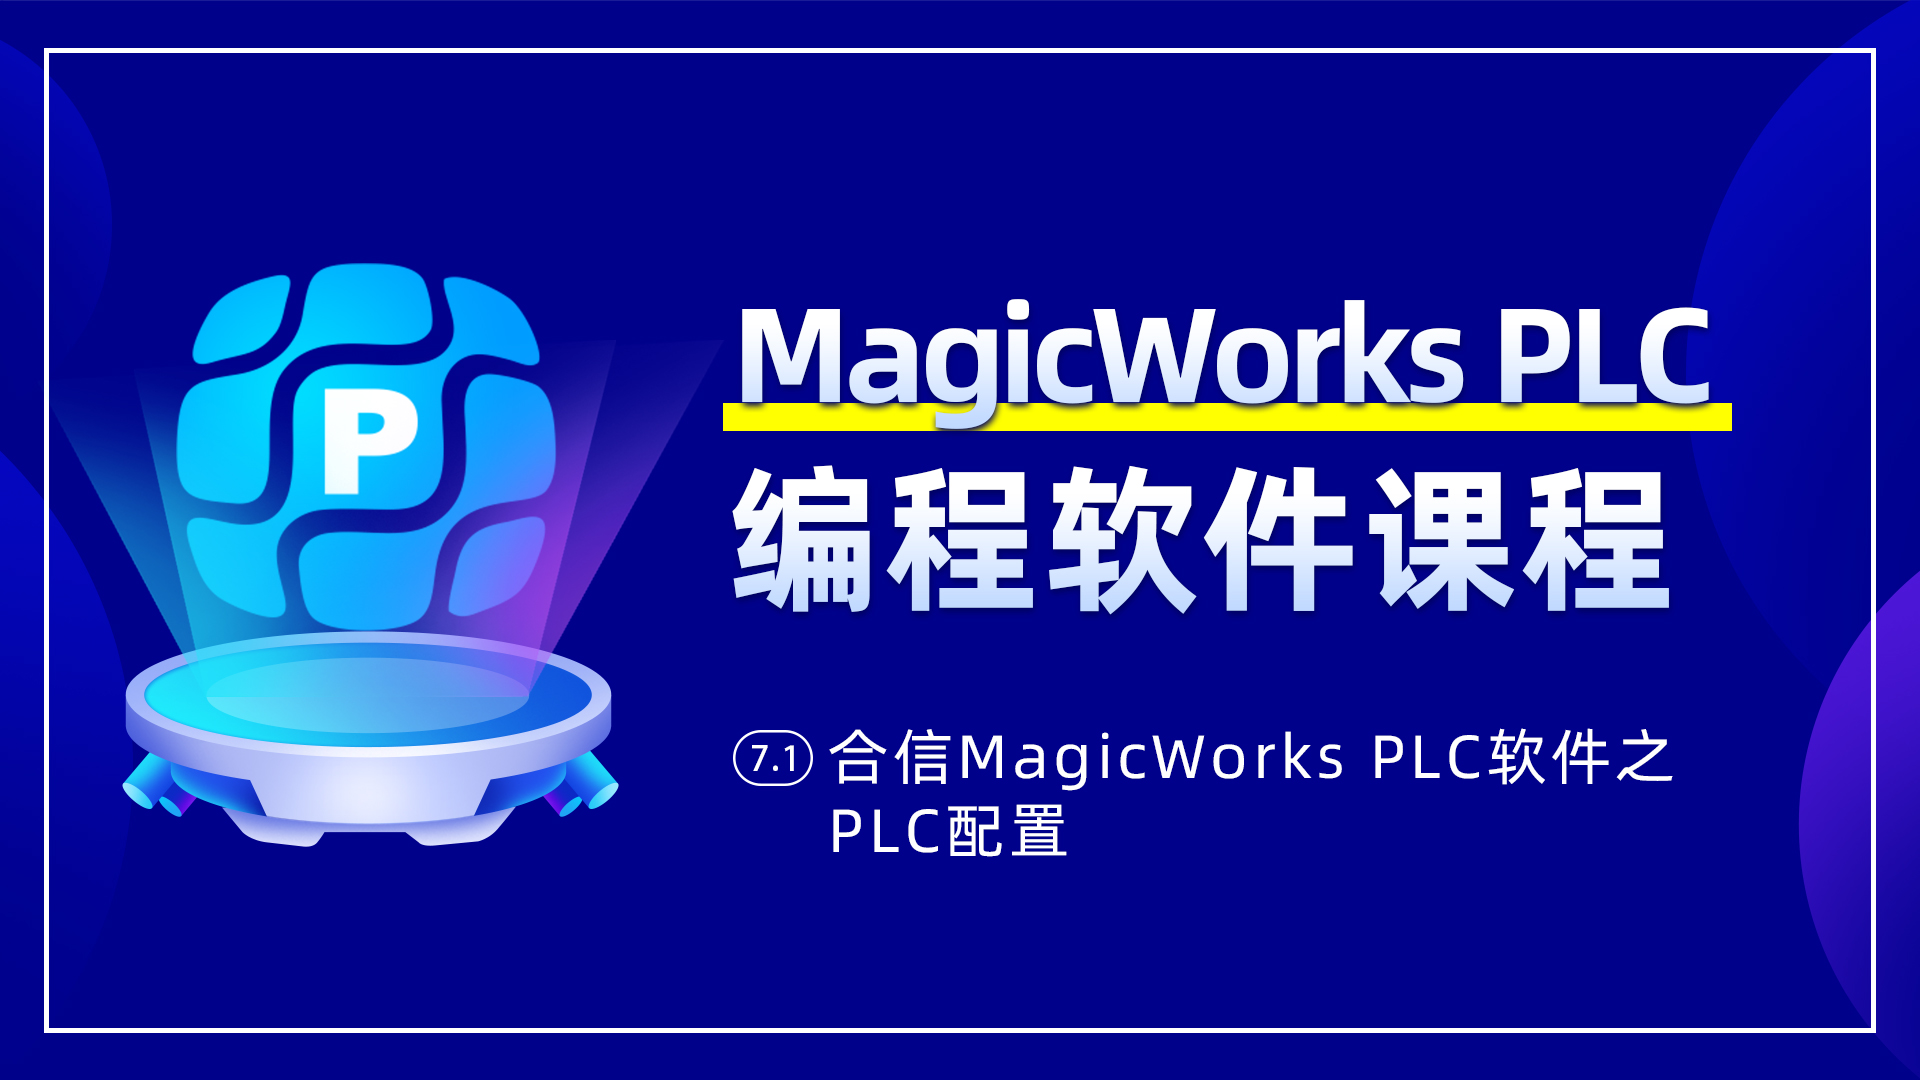 7.1、合信MagicWorks PLCAppPLC配置之系统块配置